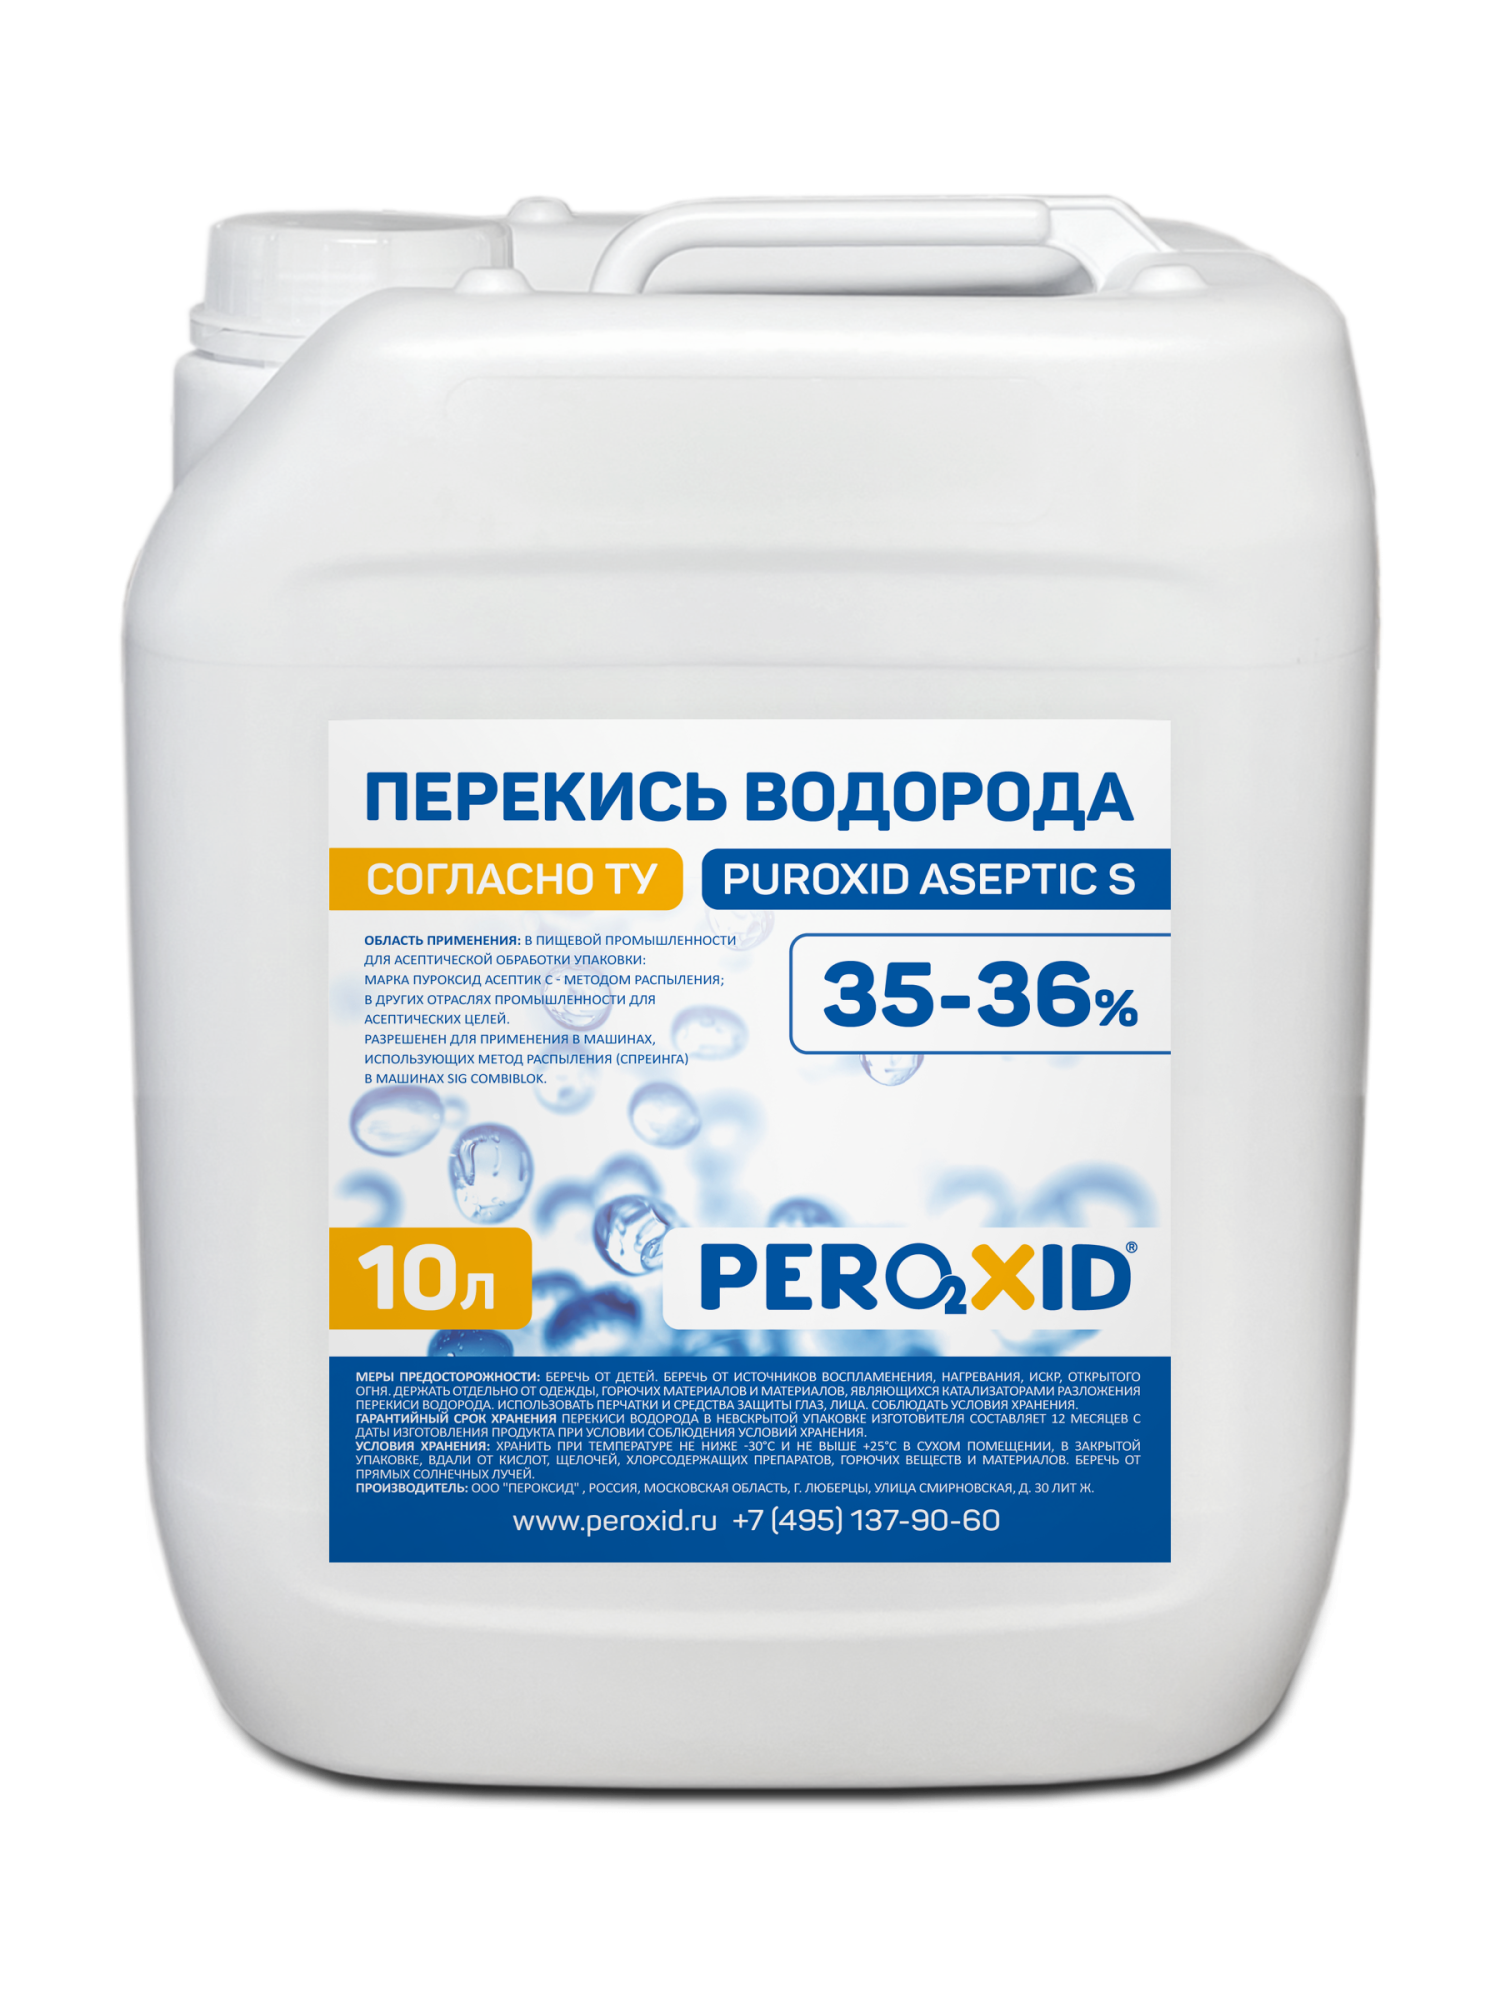 Перекись водорода асептическая PEROXID 35-36% марка Пуроксид асептик С ТУ 2123-004-25665344-2009 10 л/12 кг